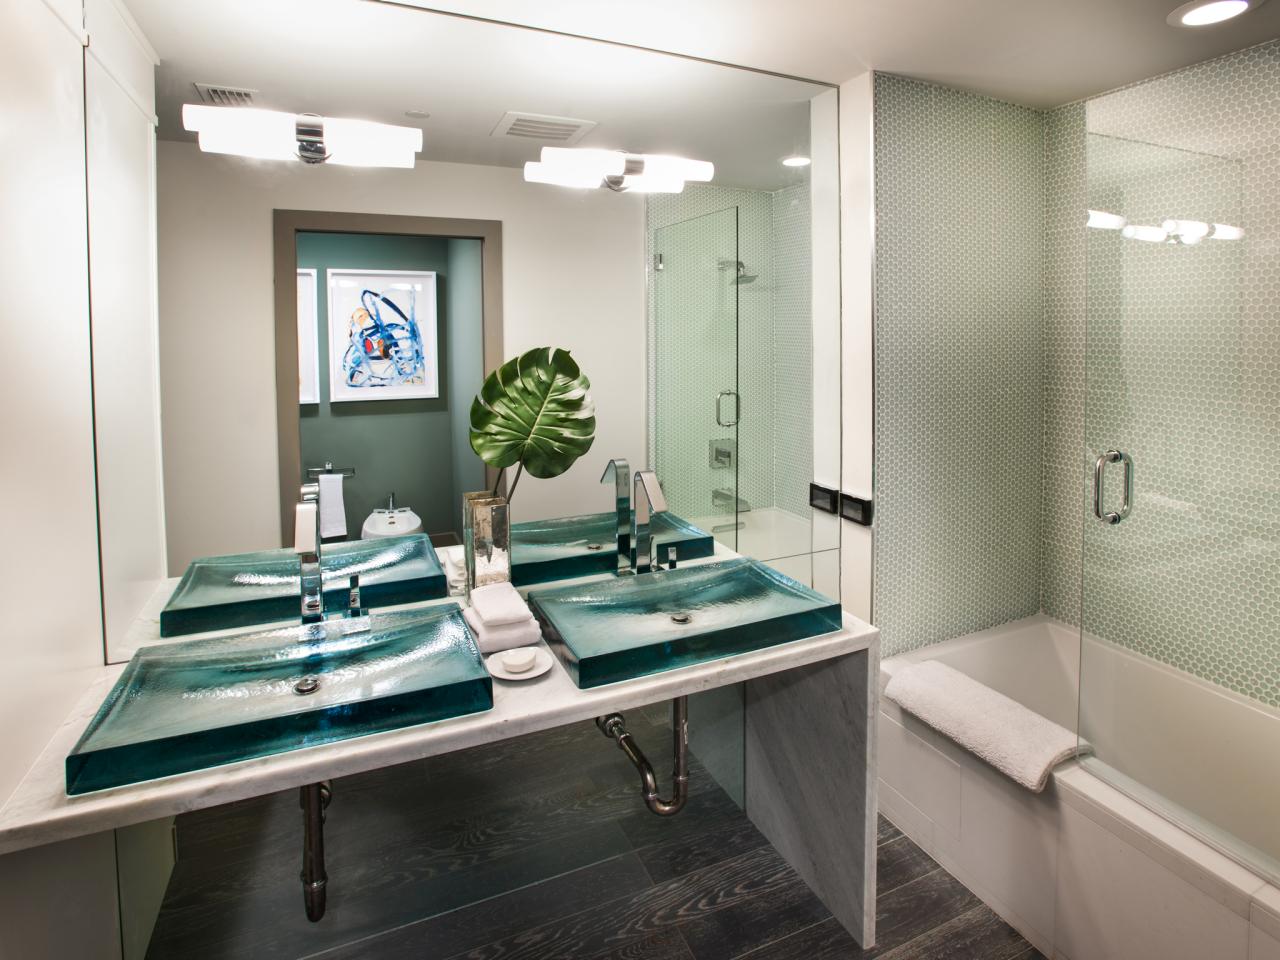 bathroom vanities ideas design ideas & remodel pictures